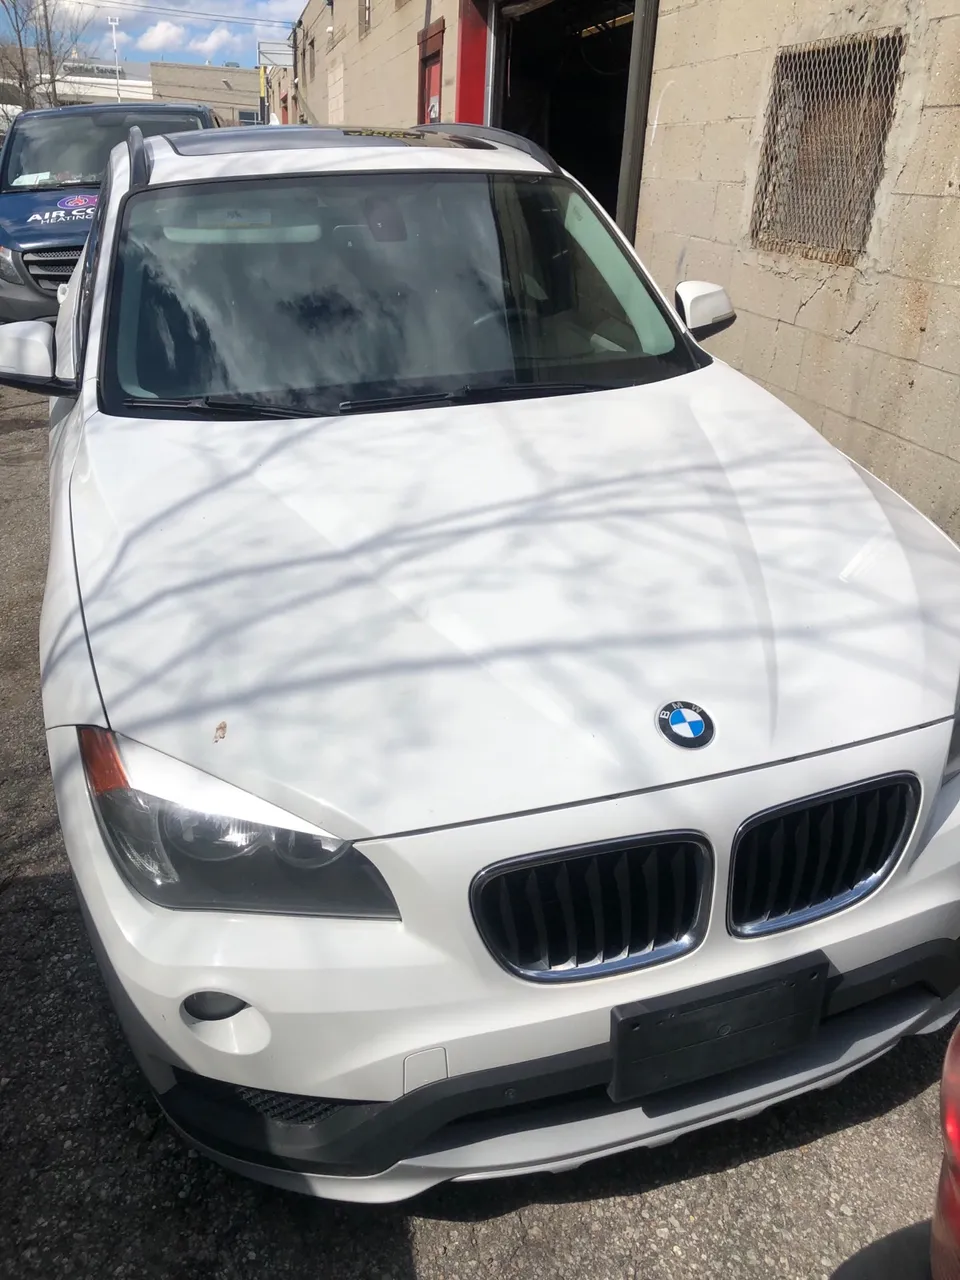 BMW x1 white